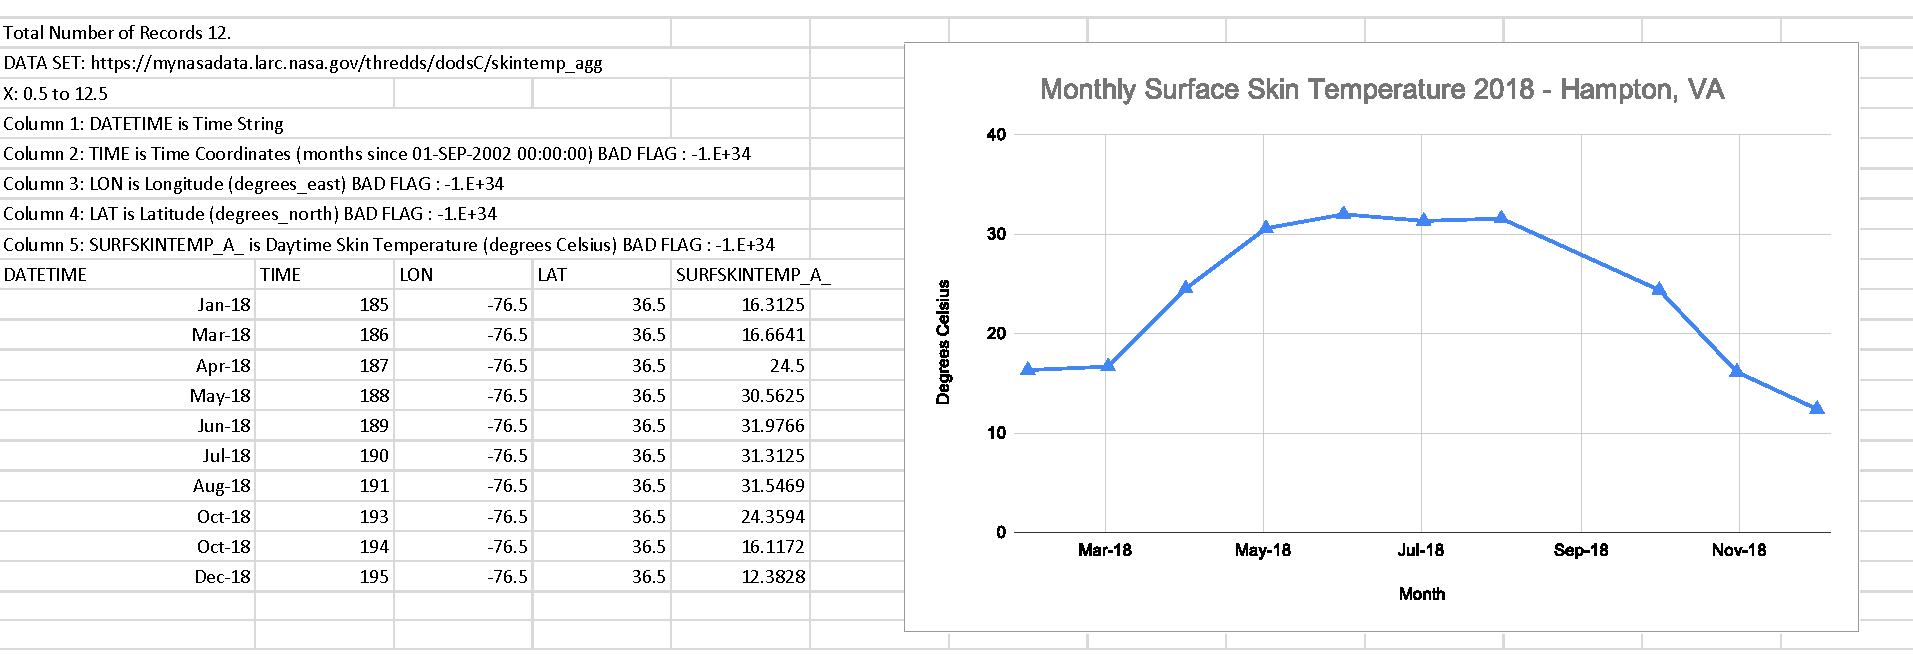 Monthly Skin Surface Temperature Data and Graph, Hampton VA 2018